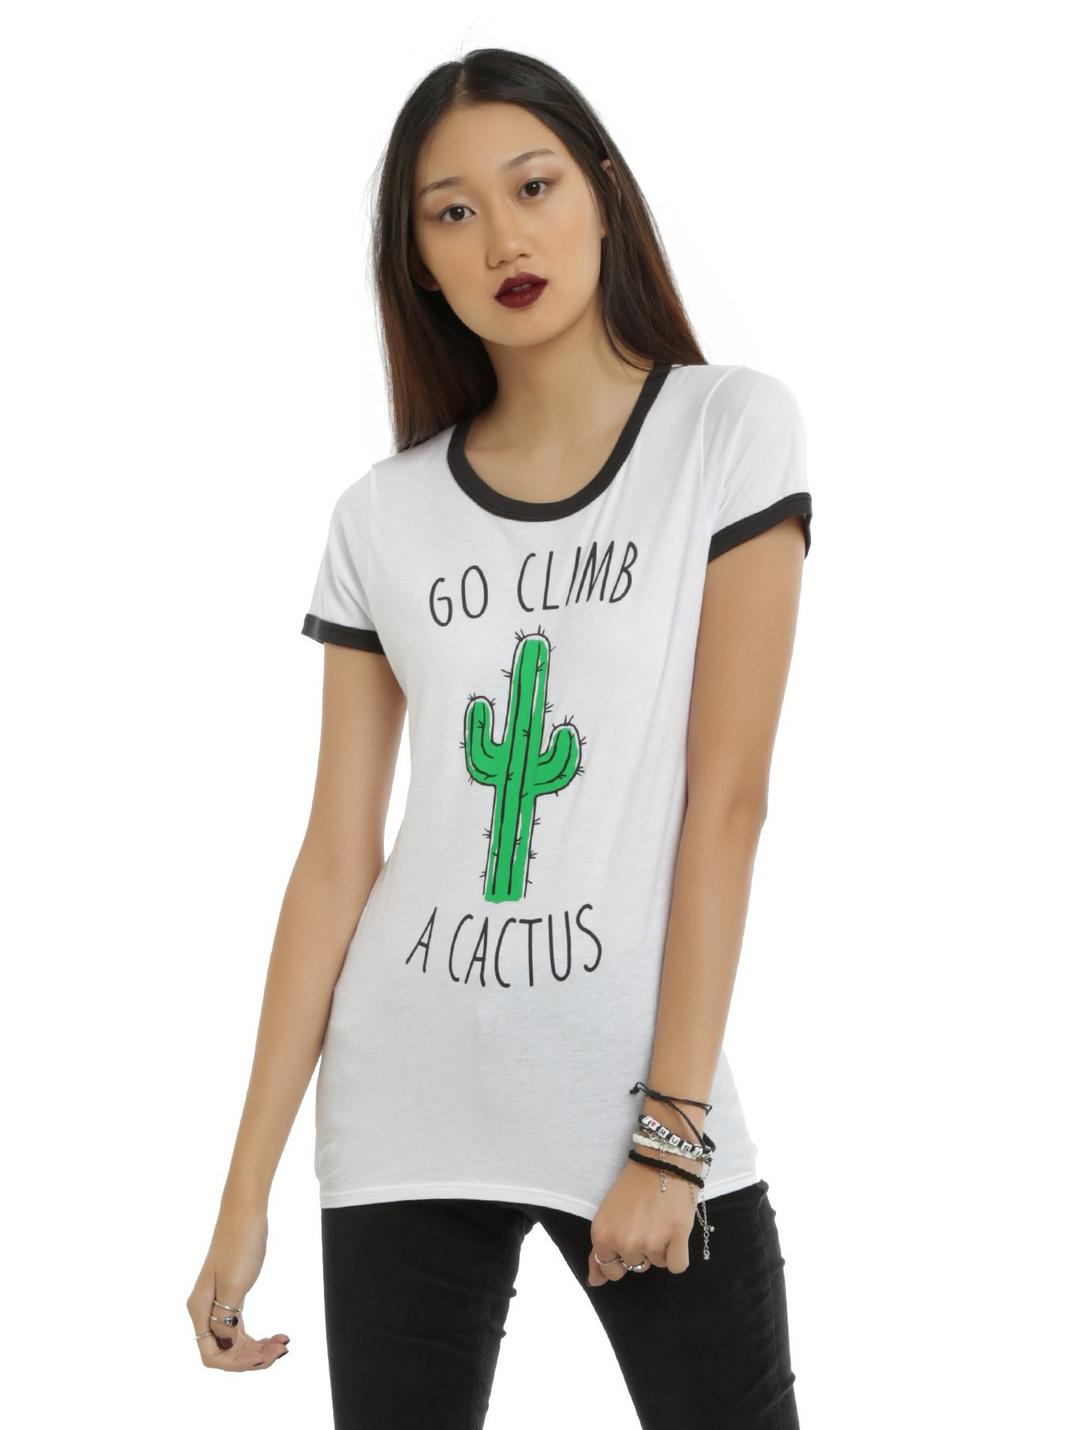 Climb A Cactus Girls Ringer T-Shirt | Hot Topic